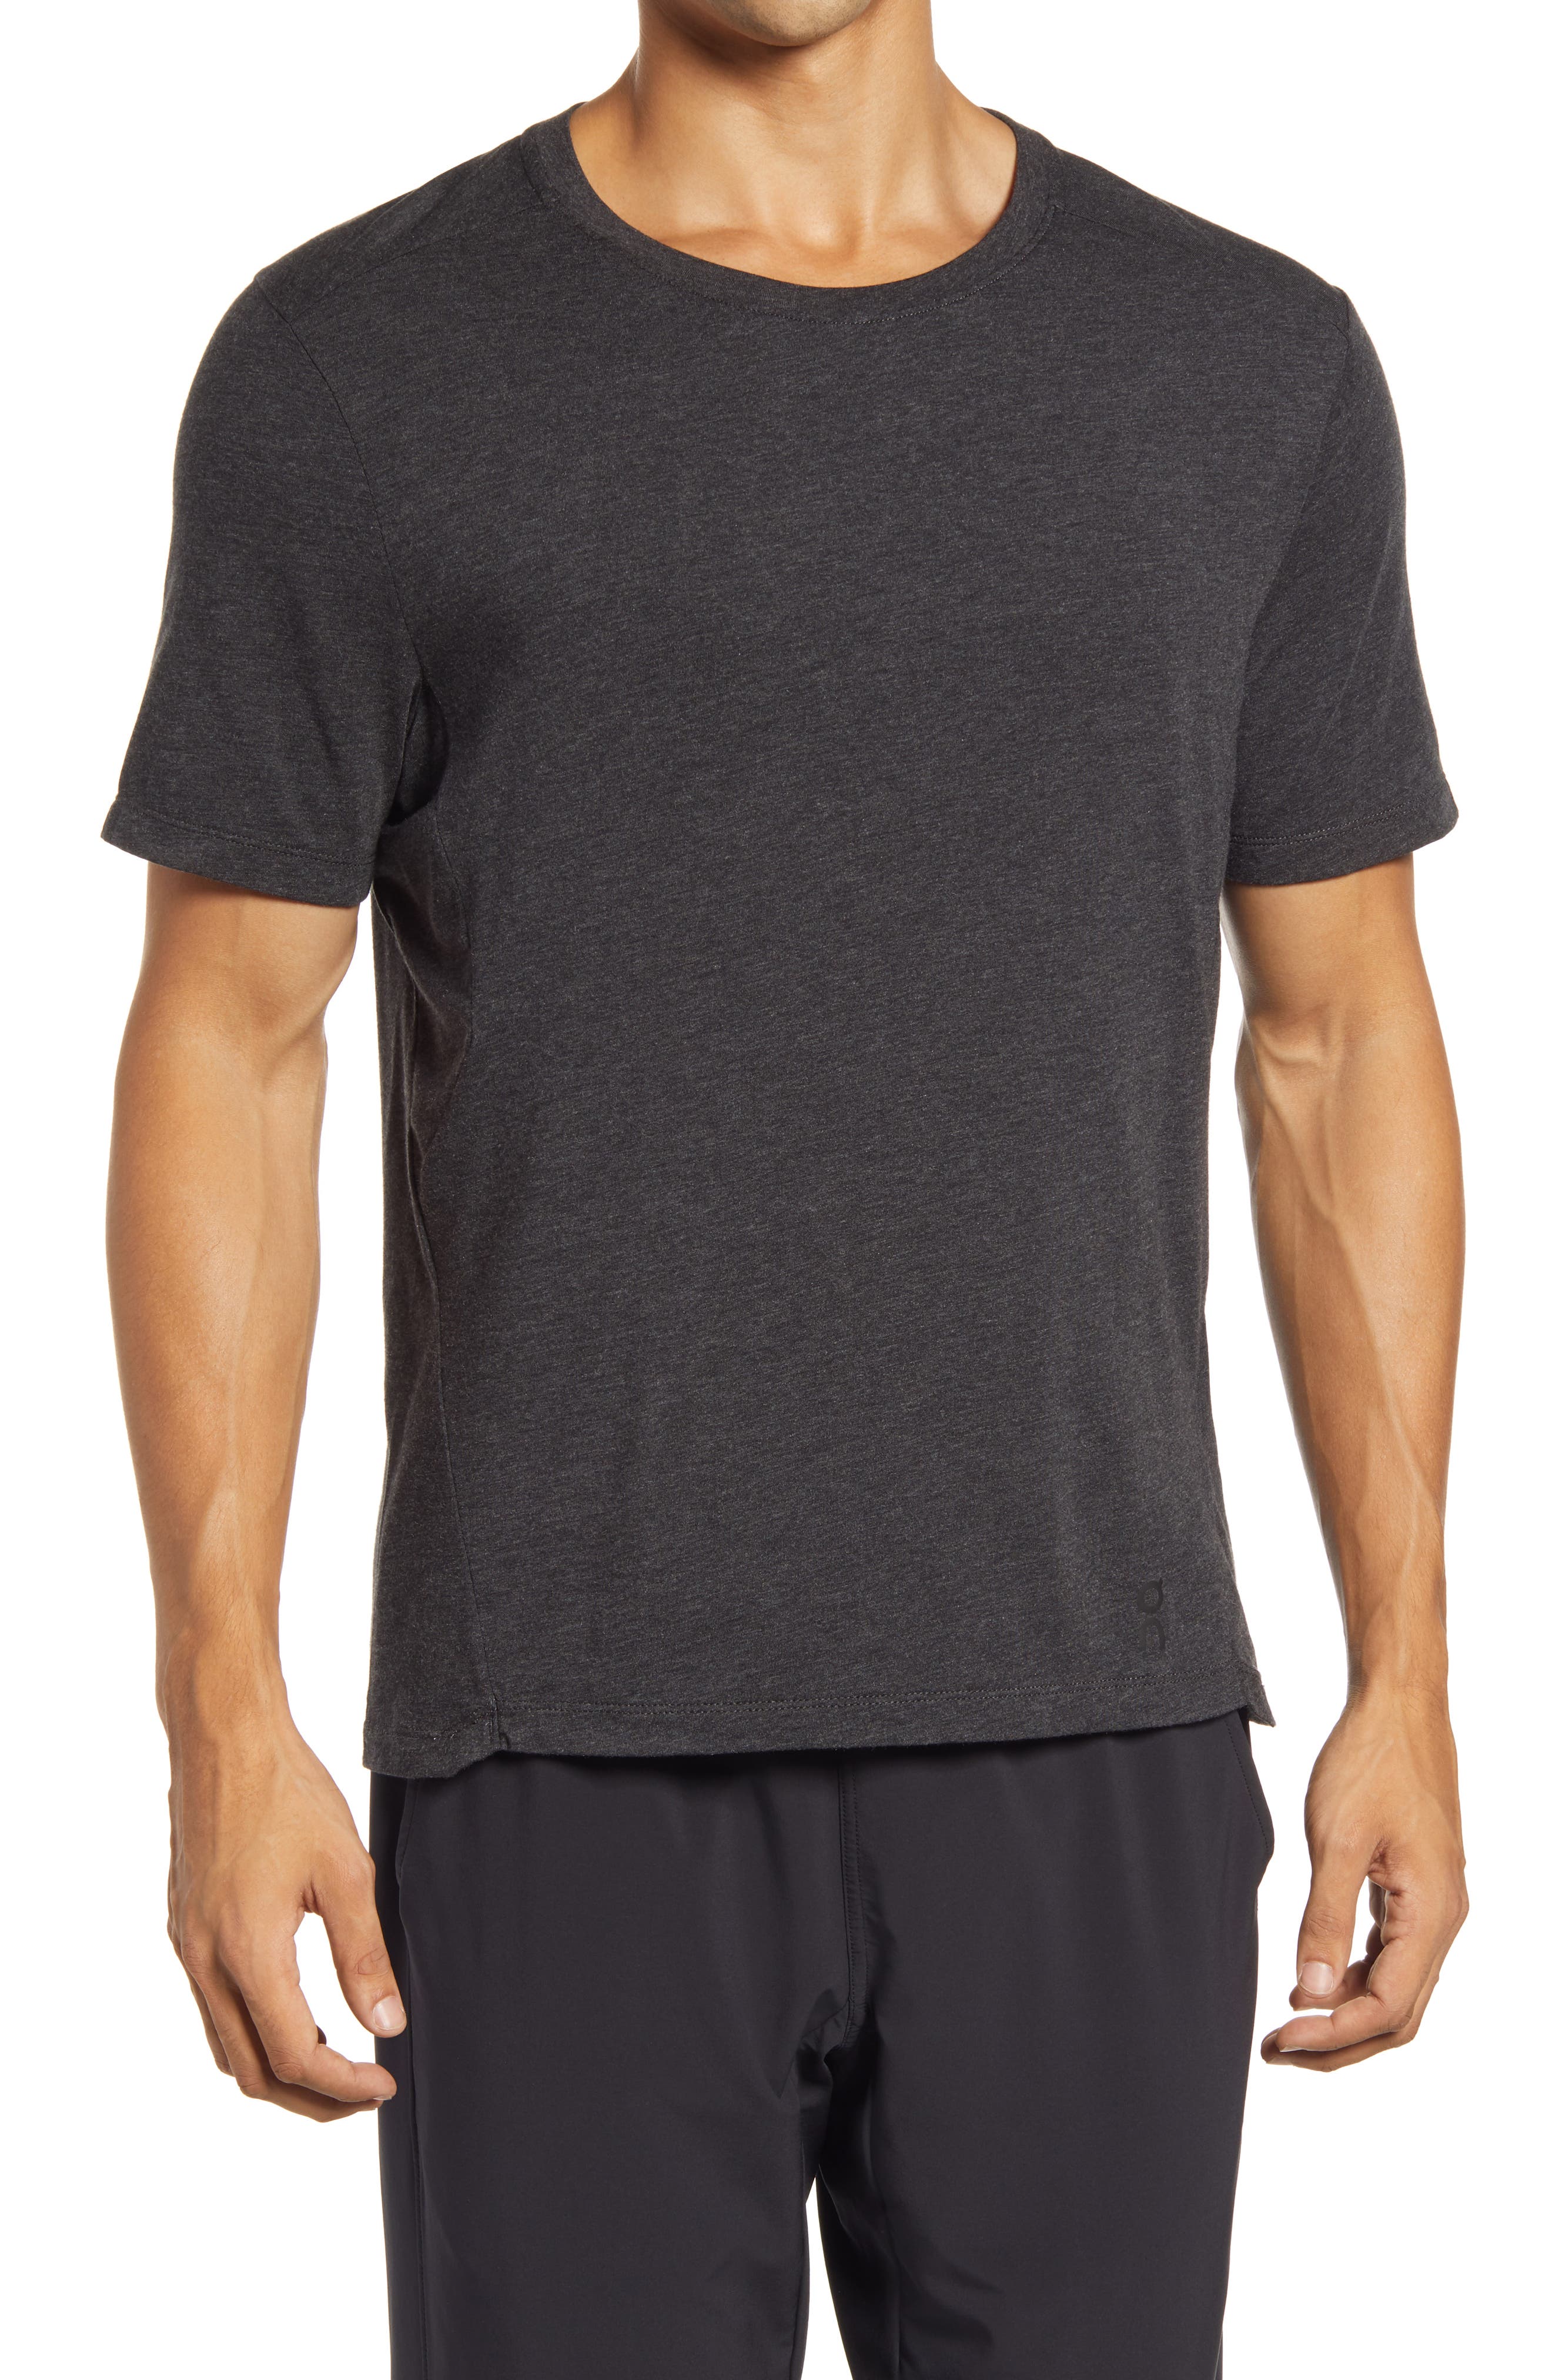 On Men's Active-T Performance Running T-Shirt in Black